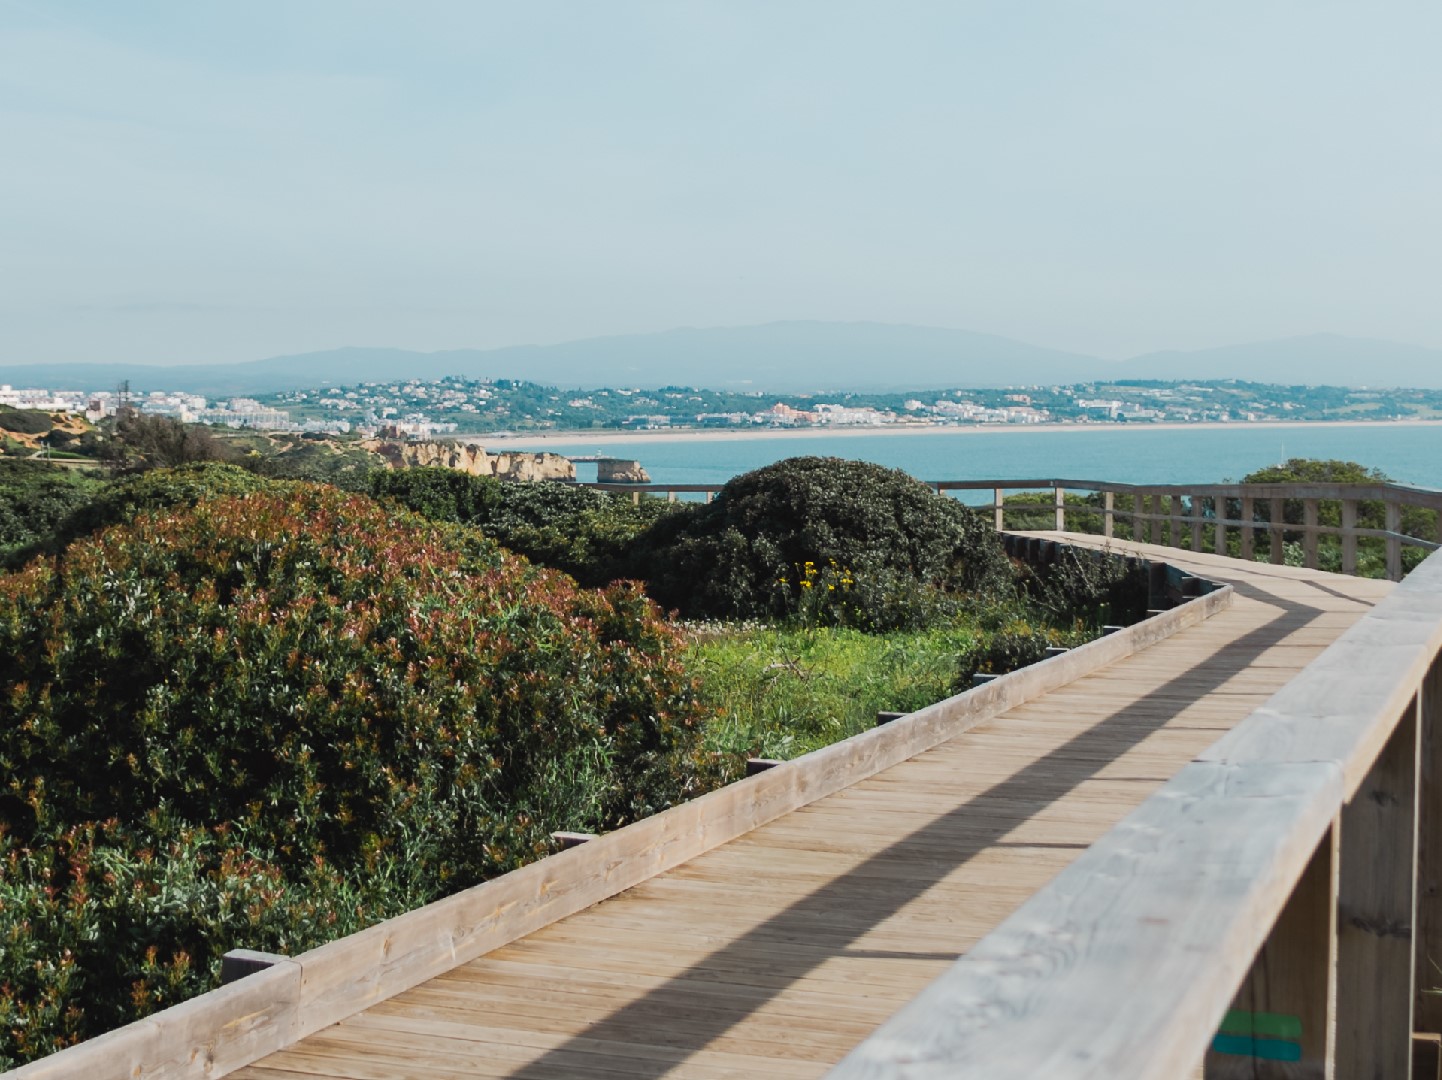 Boardwalk Ponta da Piedade, Lagos, Algarve